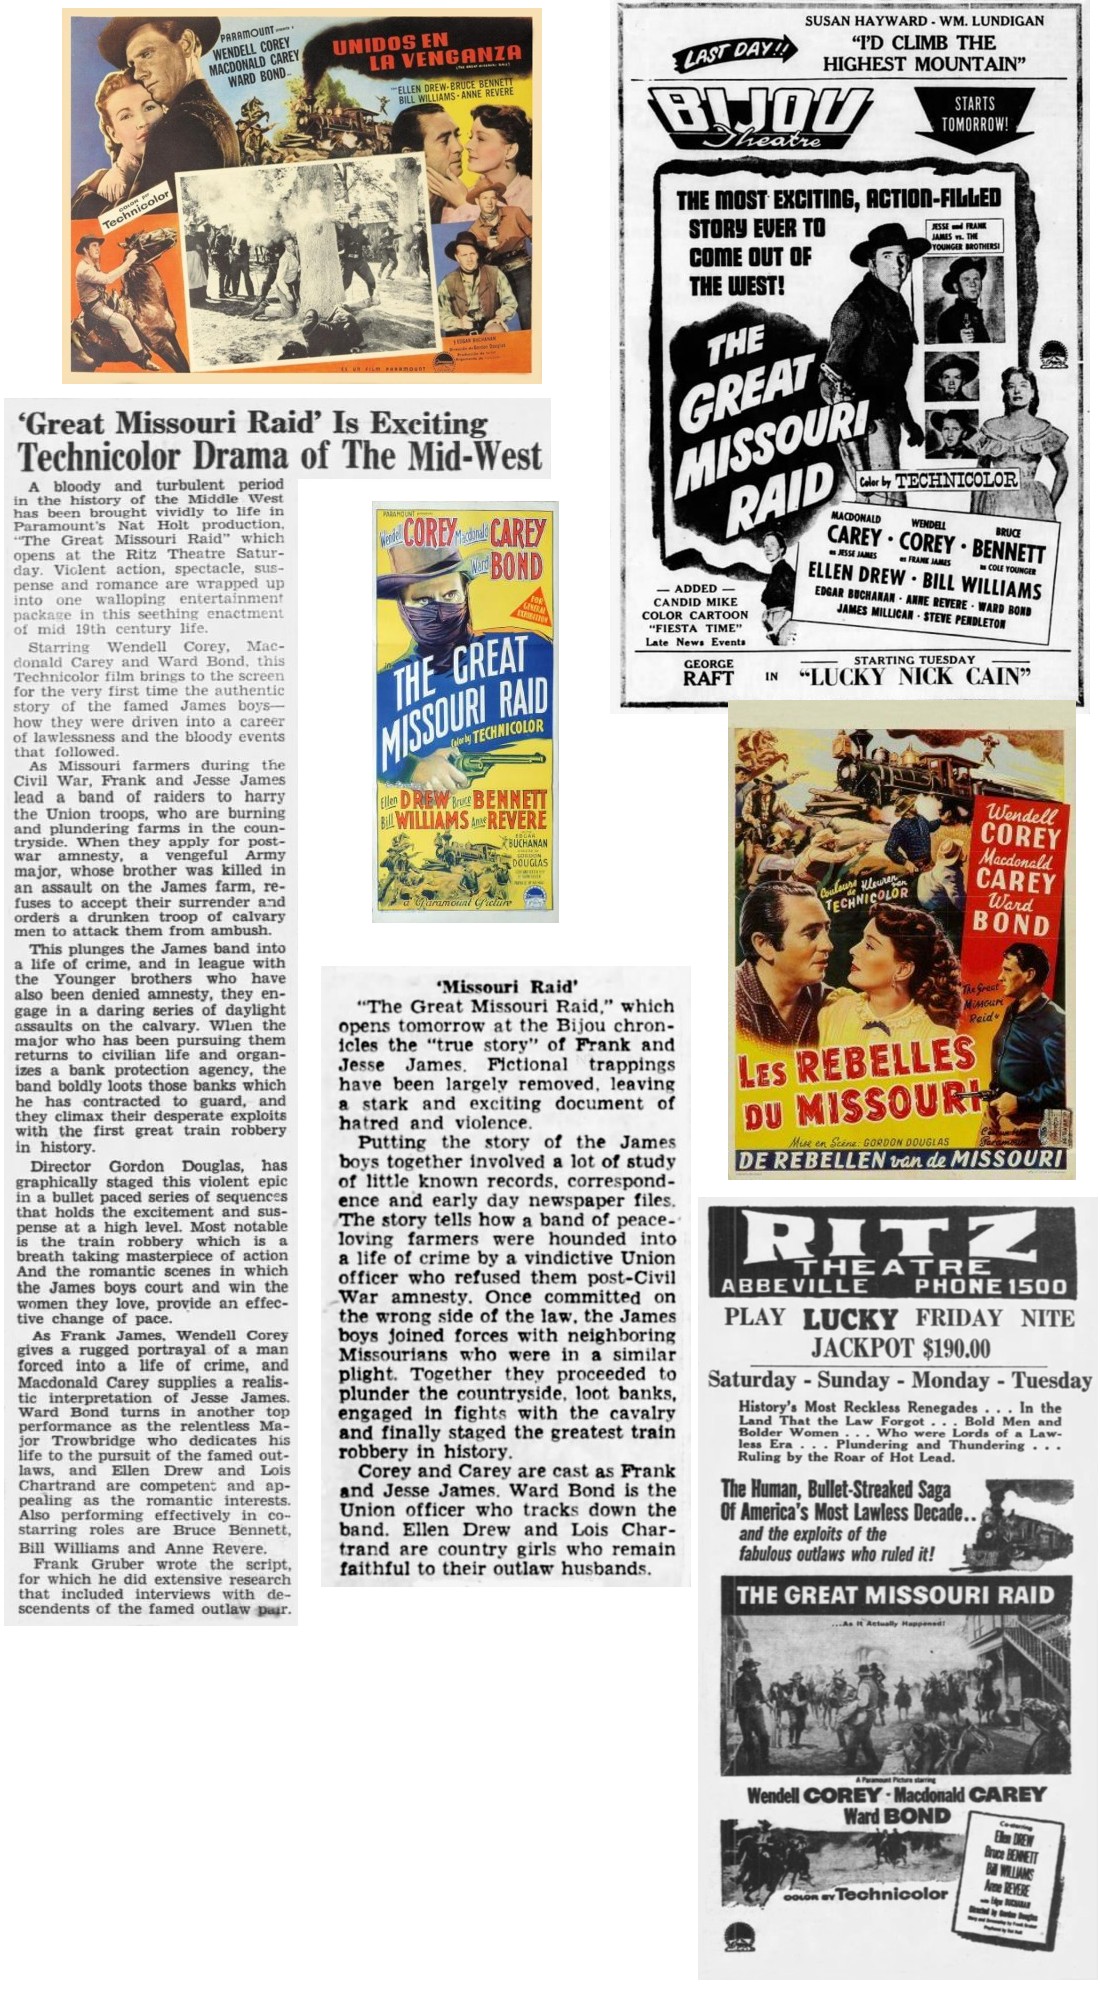 The Great Missouri Raid lobby card one sheet daybill cinema ads film reviews